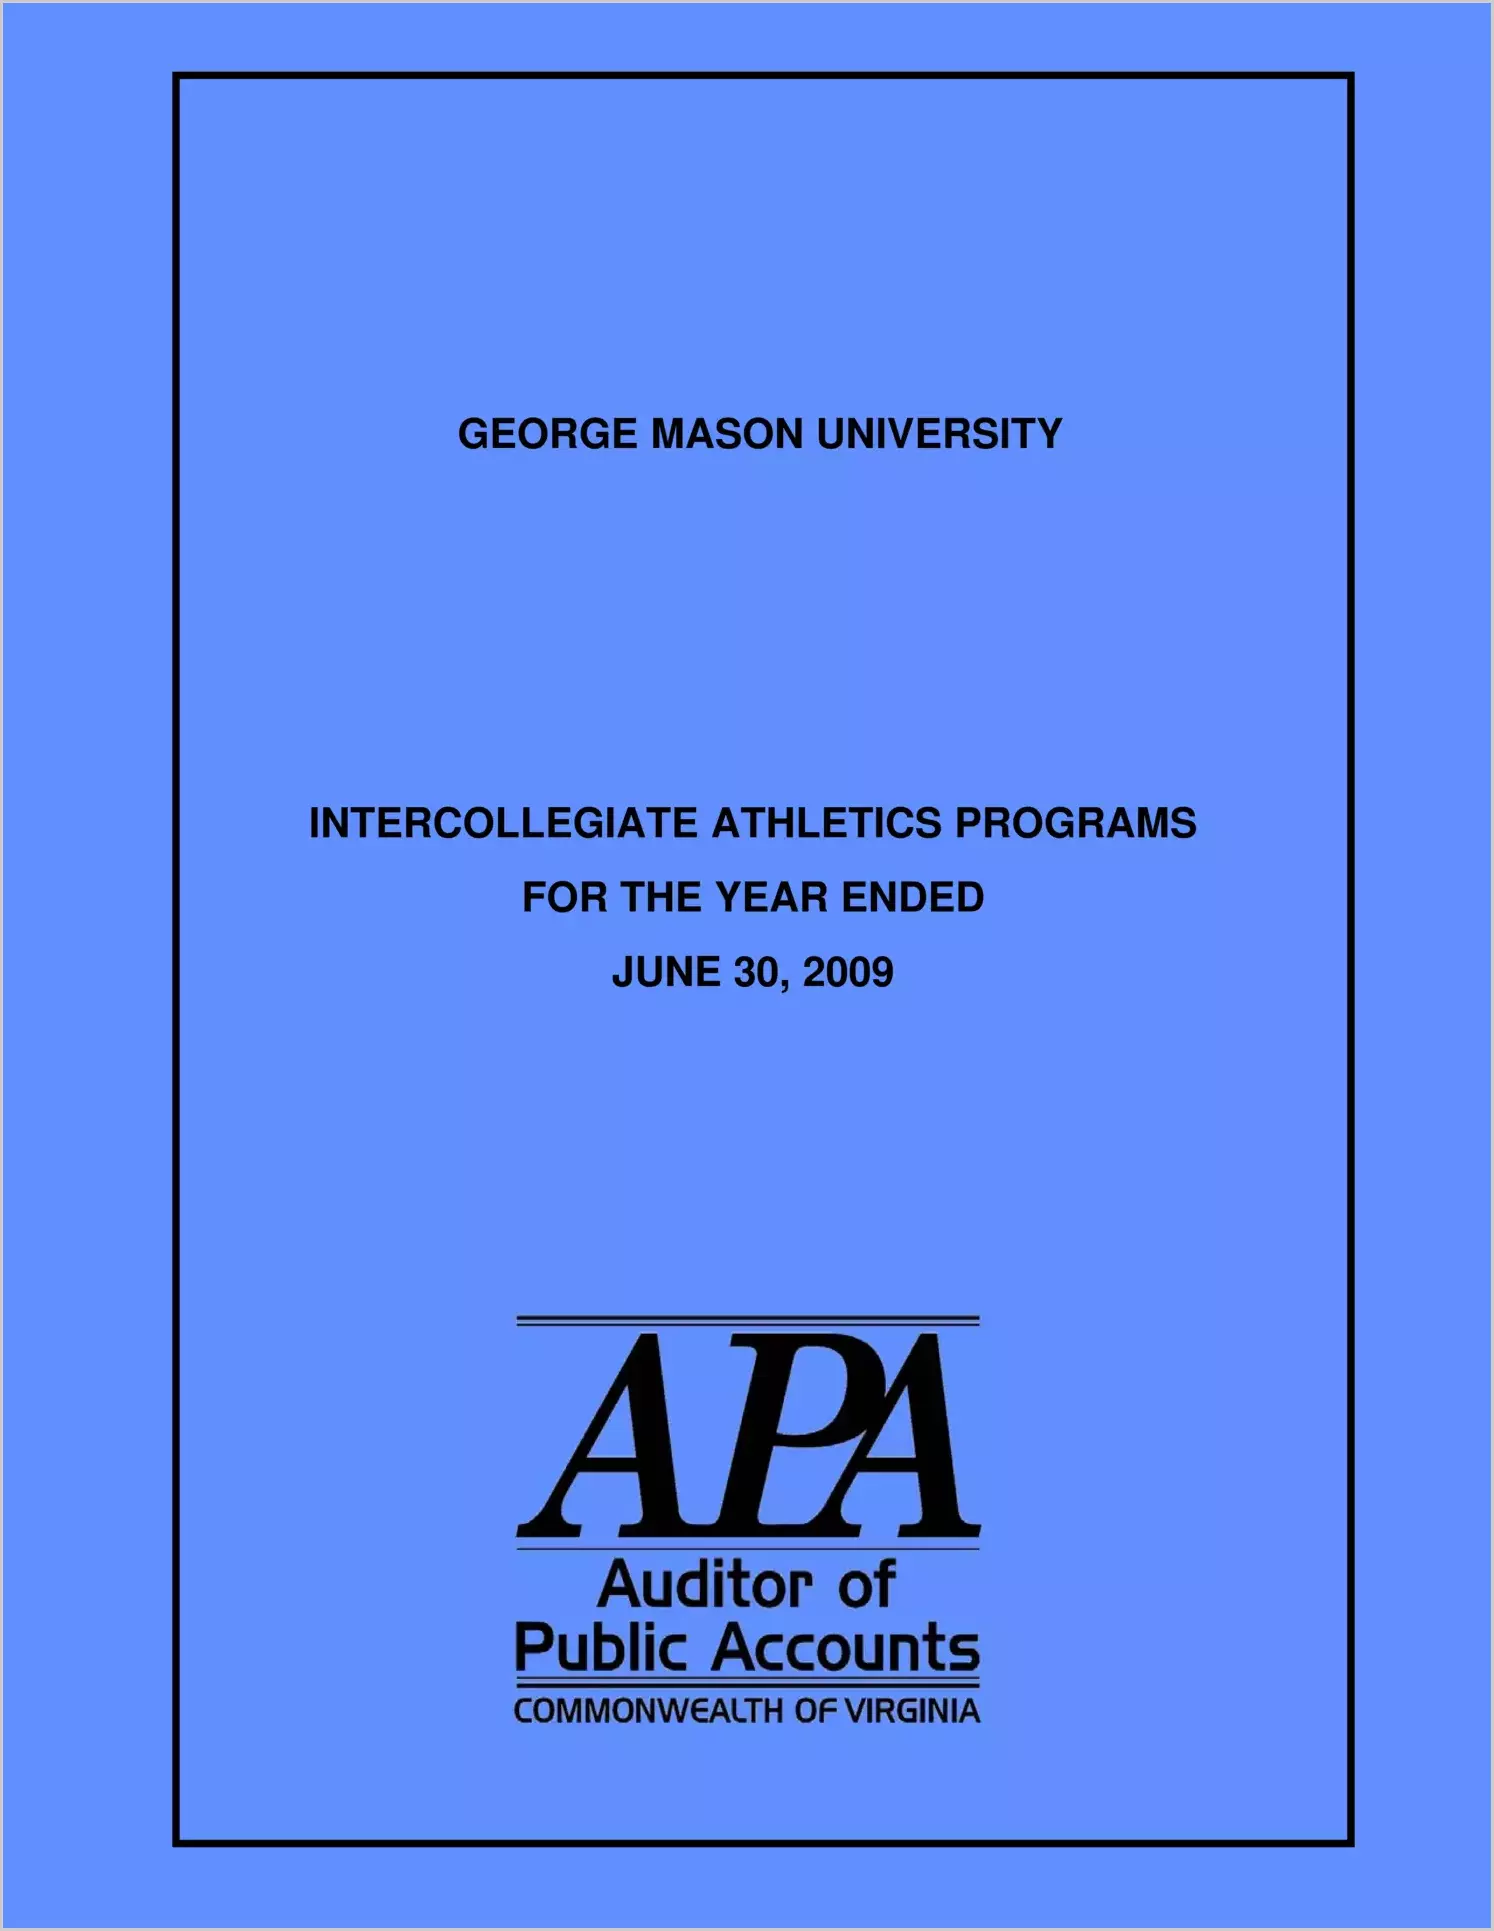 George Mason University Intercollegiate Athletics Programs for the year ended June 30, 2009